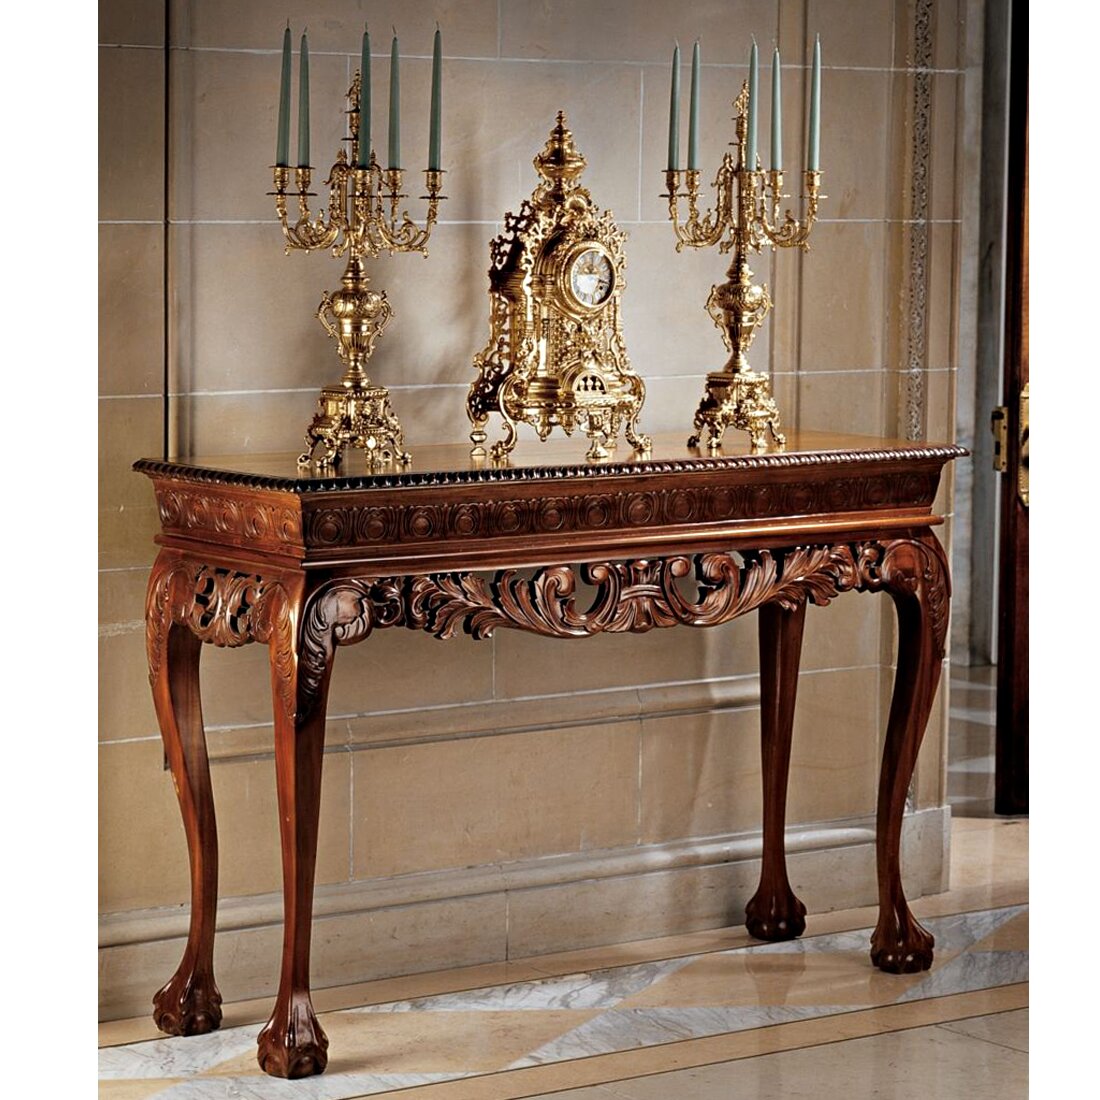 Design Toscano Le Monde Palace Console Table AF7167 